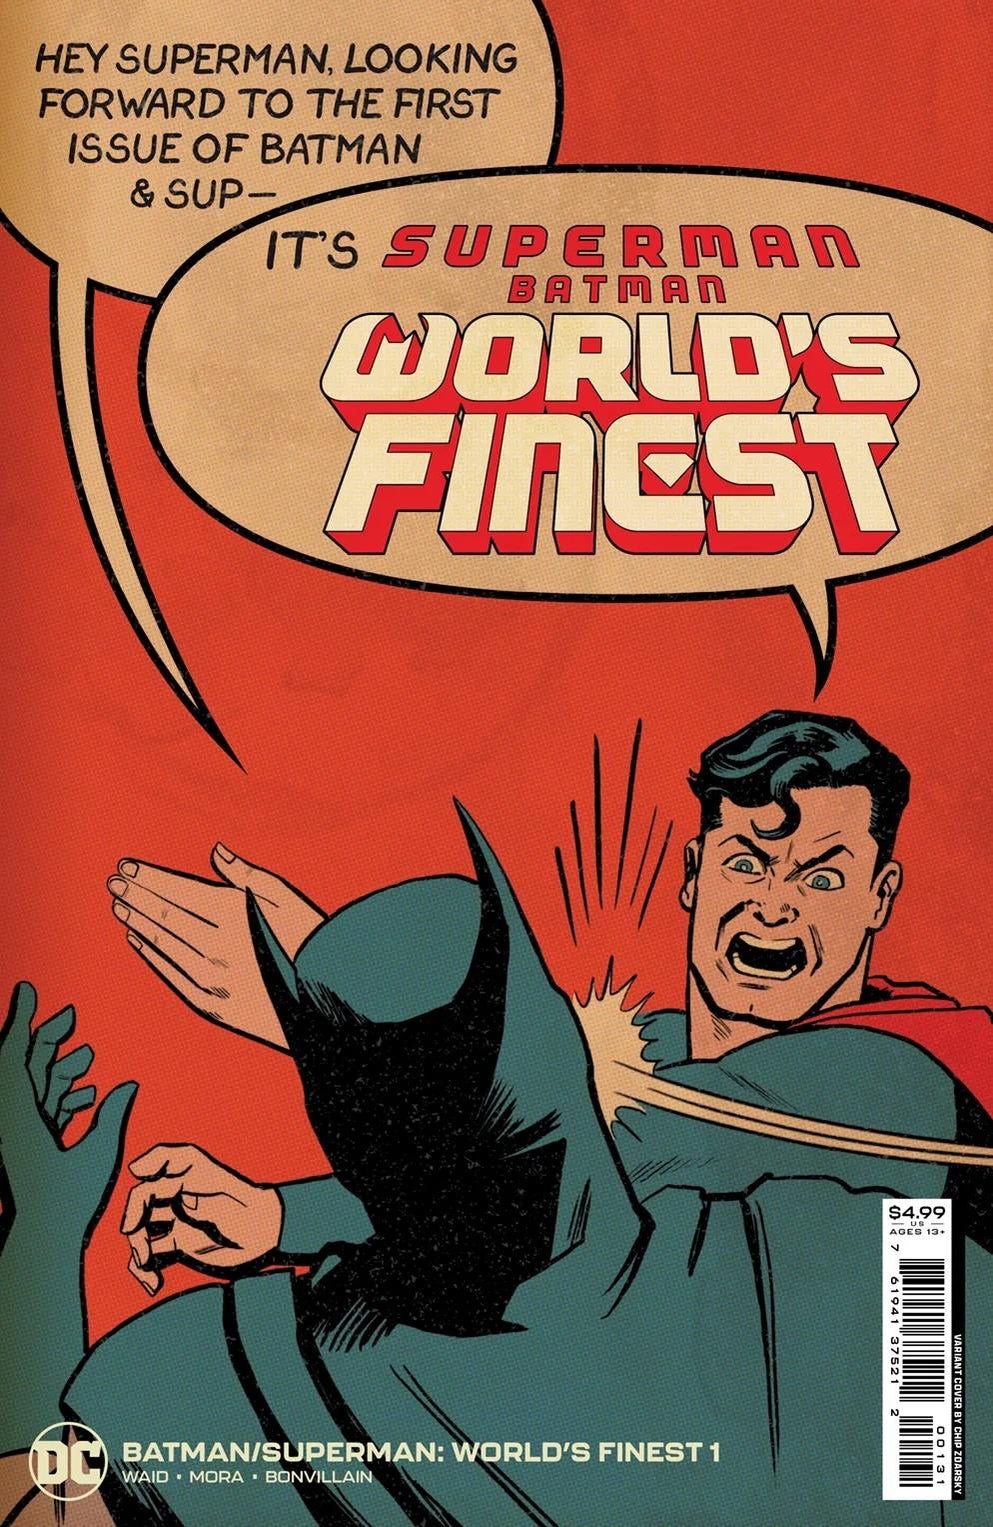 batman-superman-worlds-finest-cv1-slap-battle-variant-superman.jpg